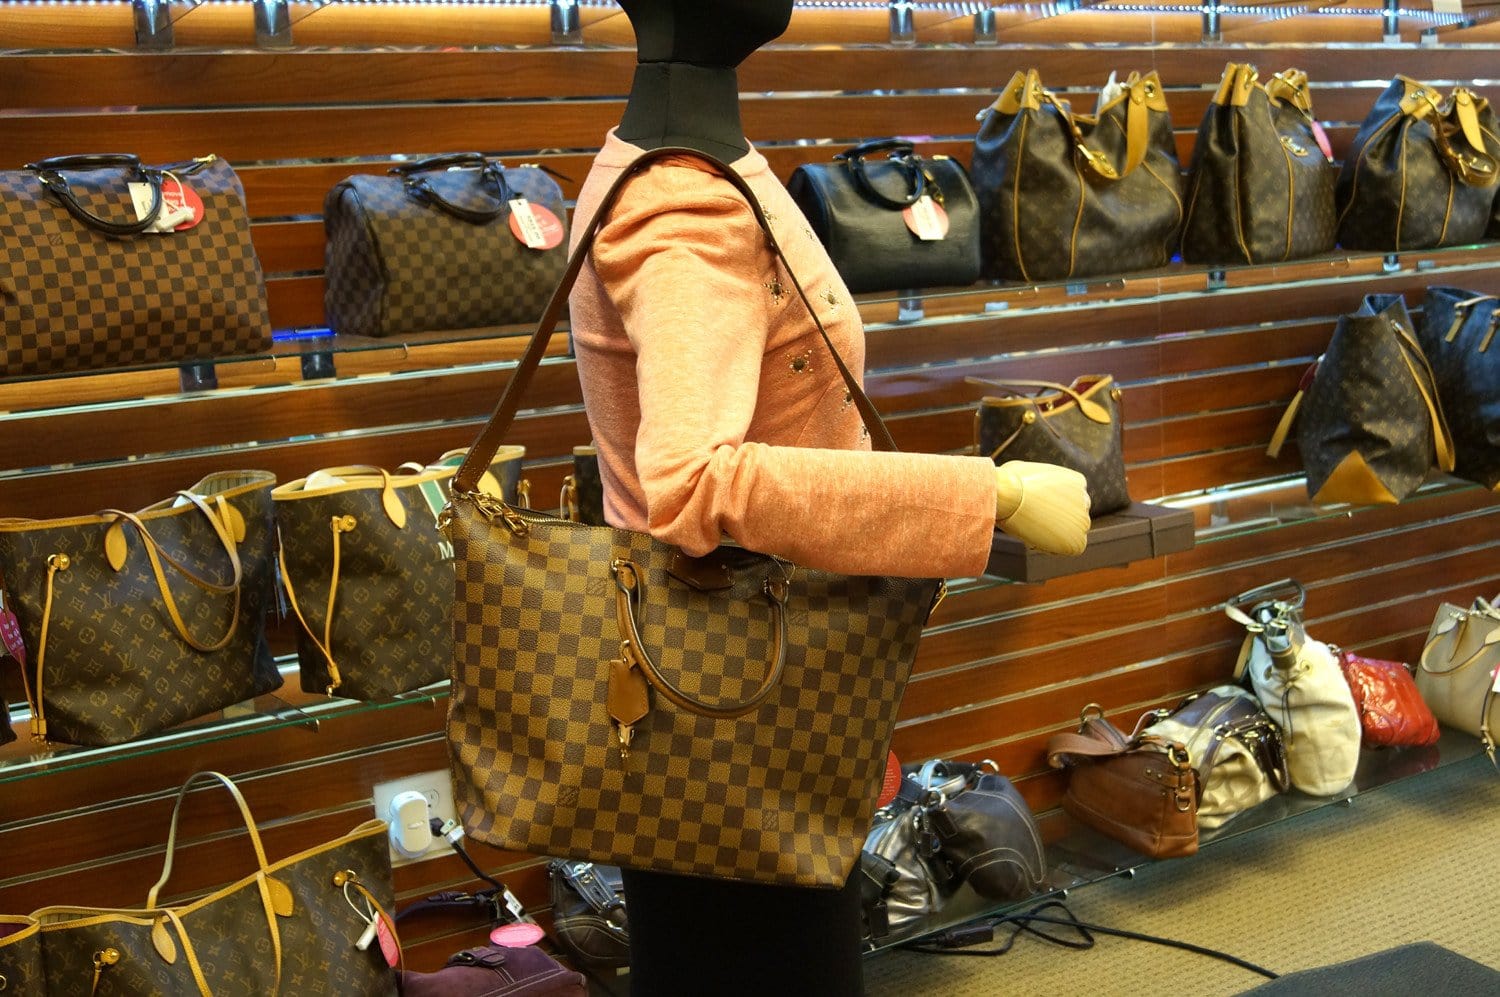 Louis Vuitton Damier Ebene Belmont 2way Zip Tote Bag with Strap